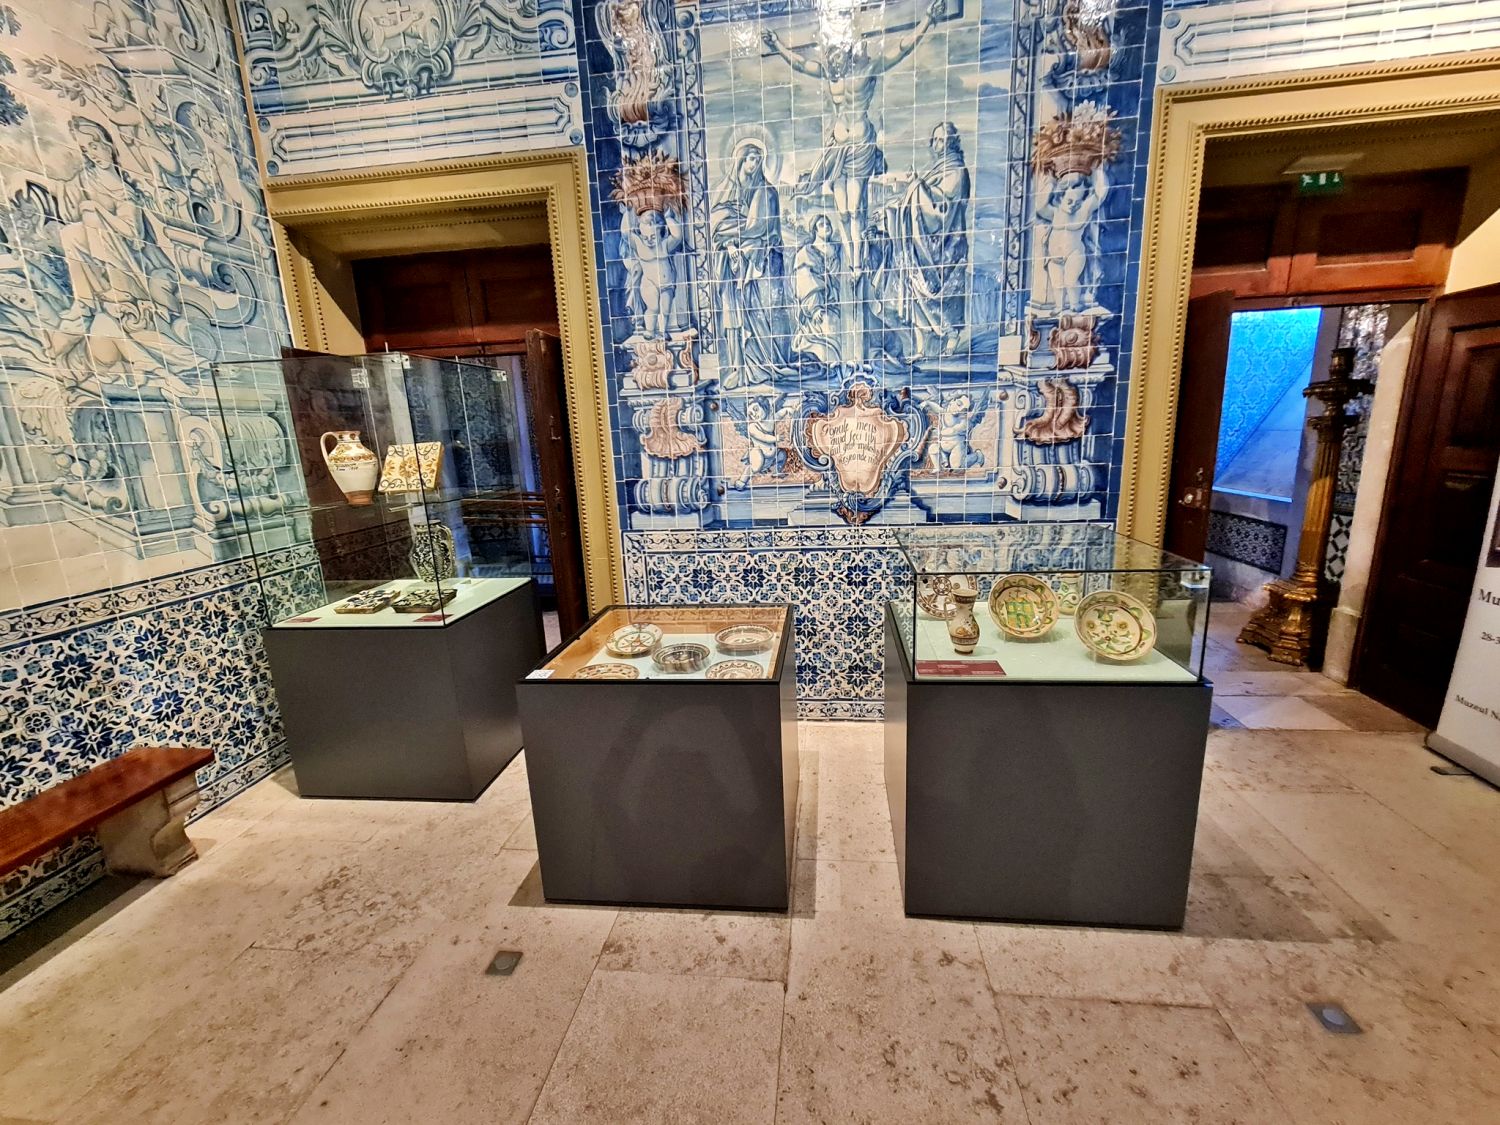 Museu Nacional do Azulejo - National Tile Museum